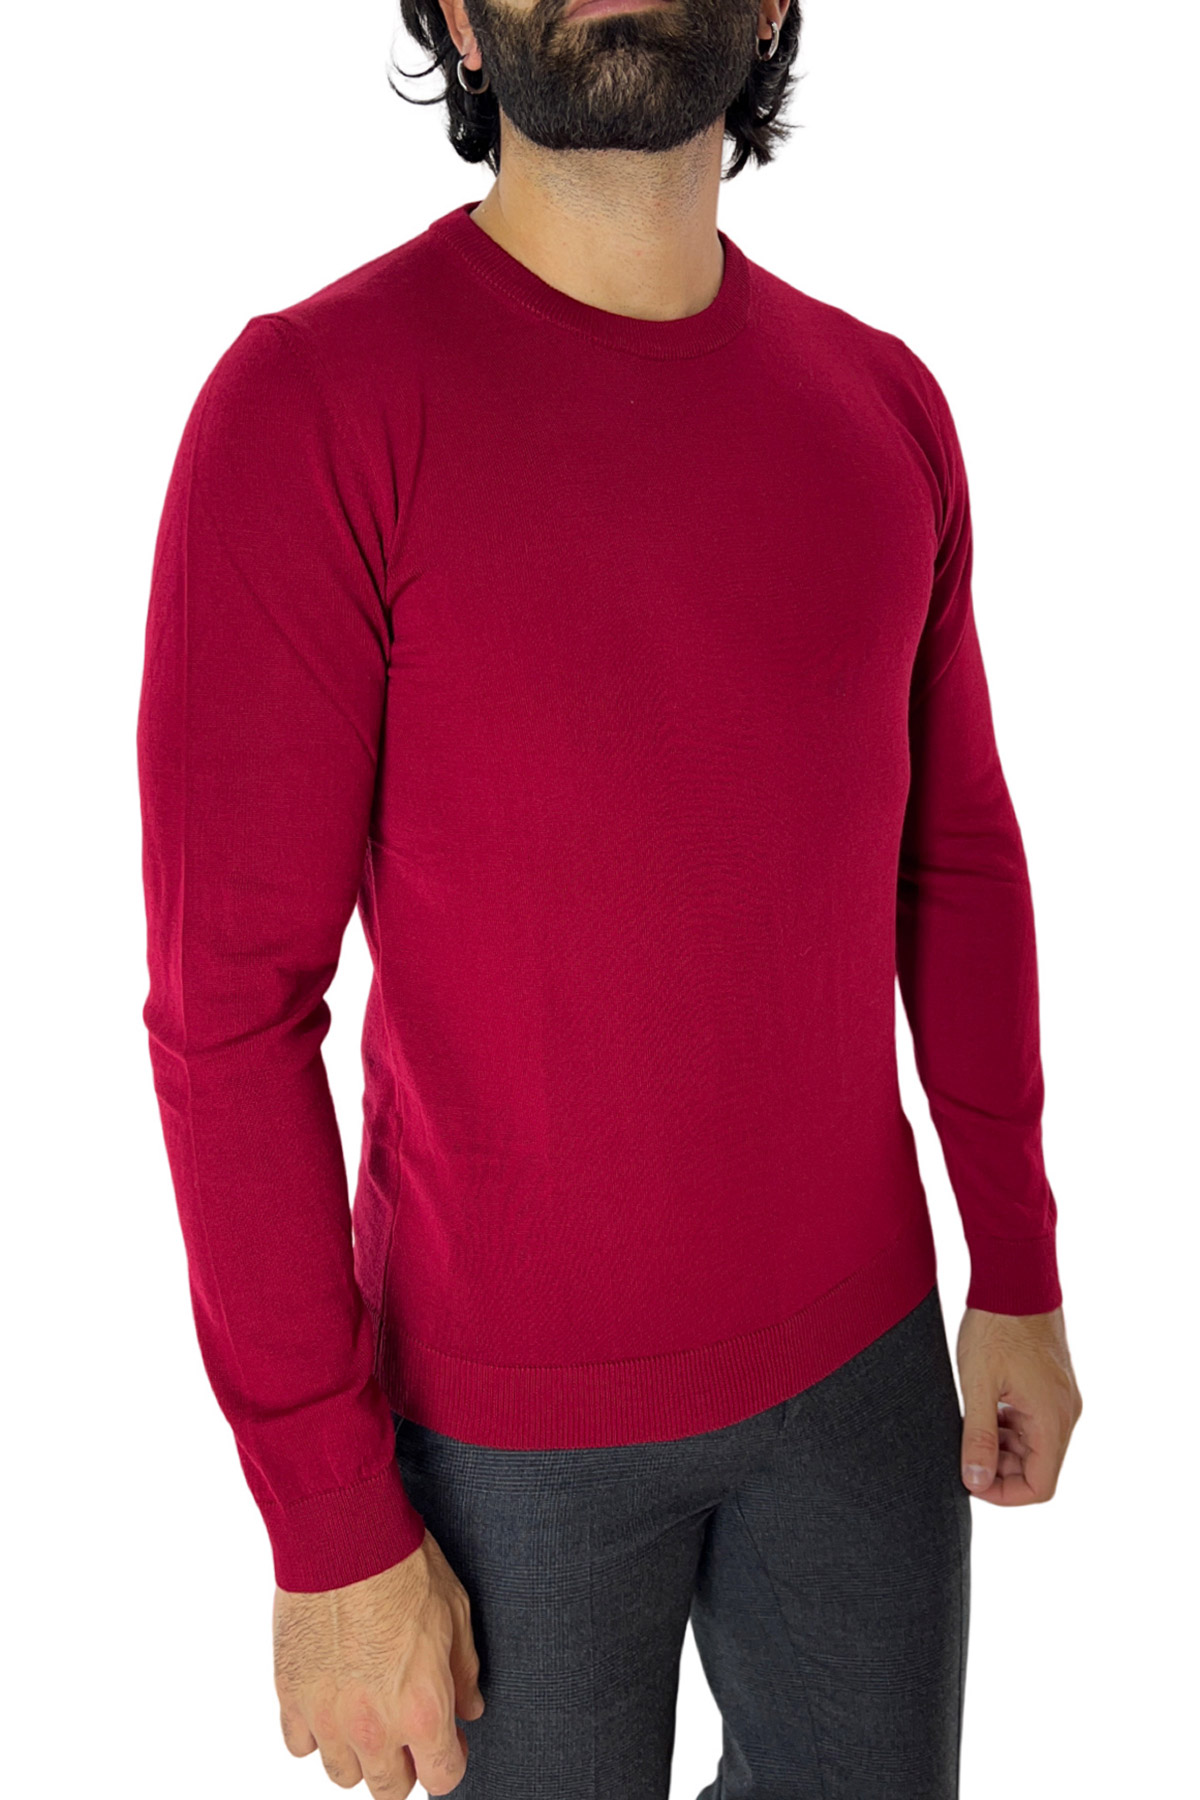 Maglioncino da uomo girocollo rosso in lana merinos slim fit made in italy tinta unita